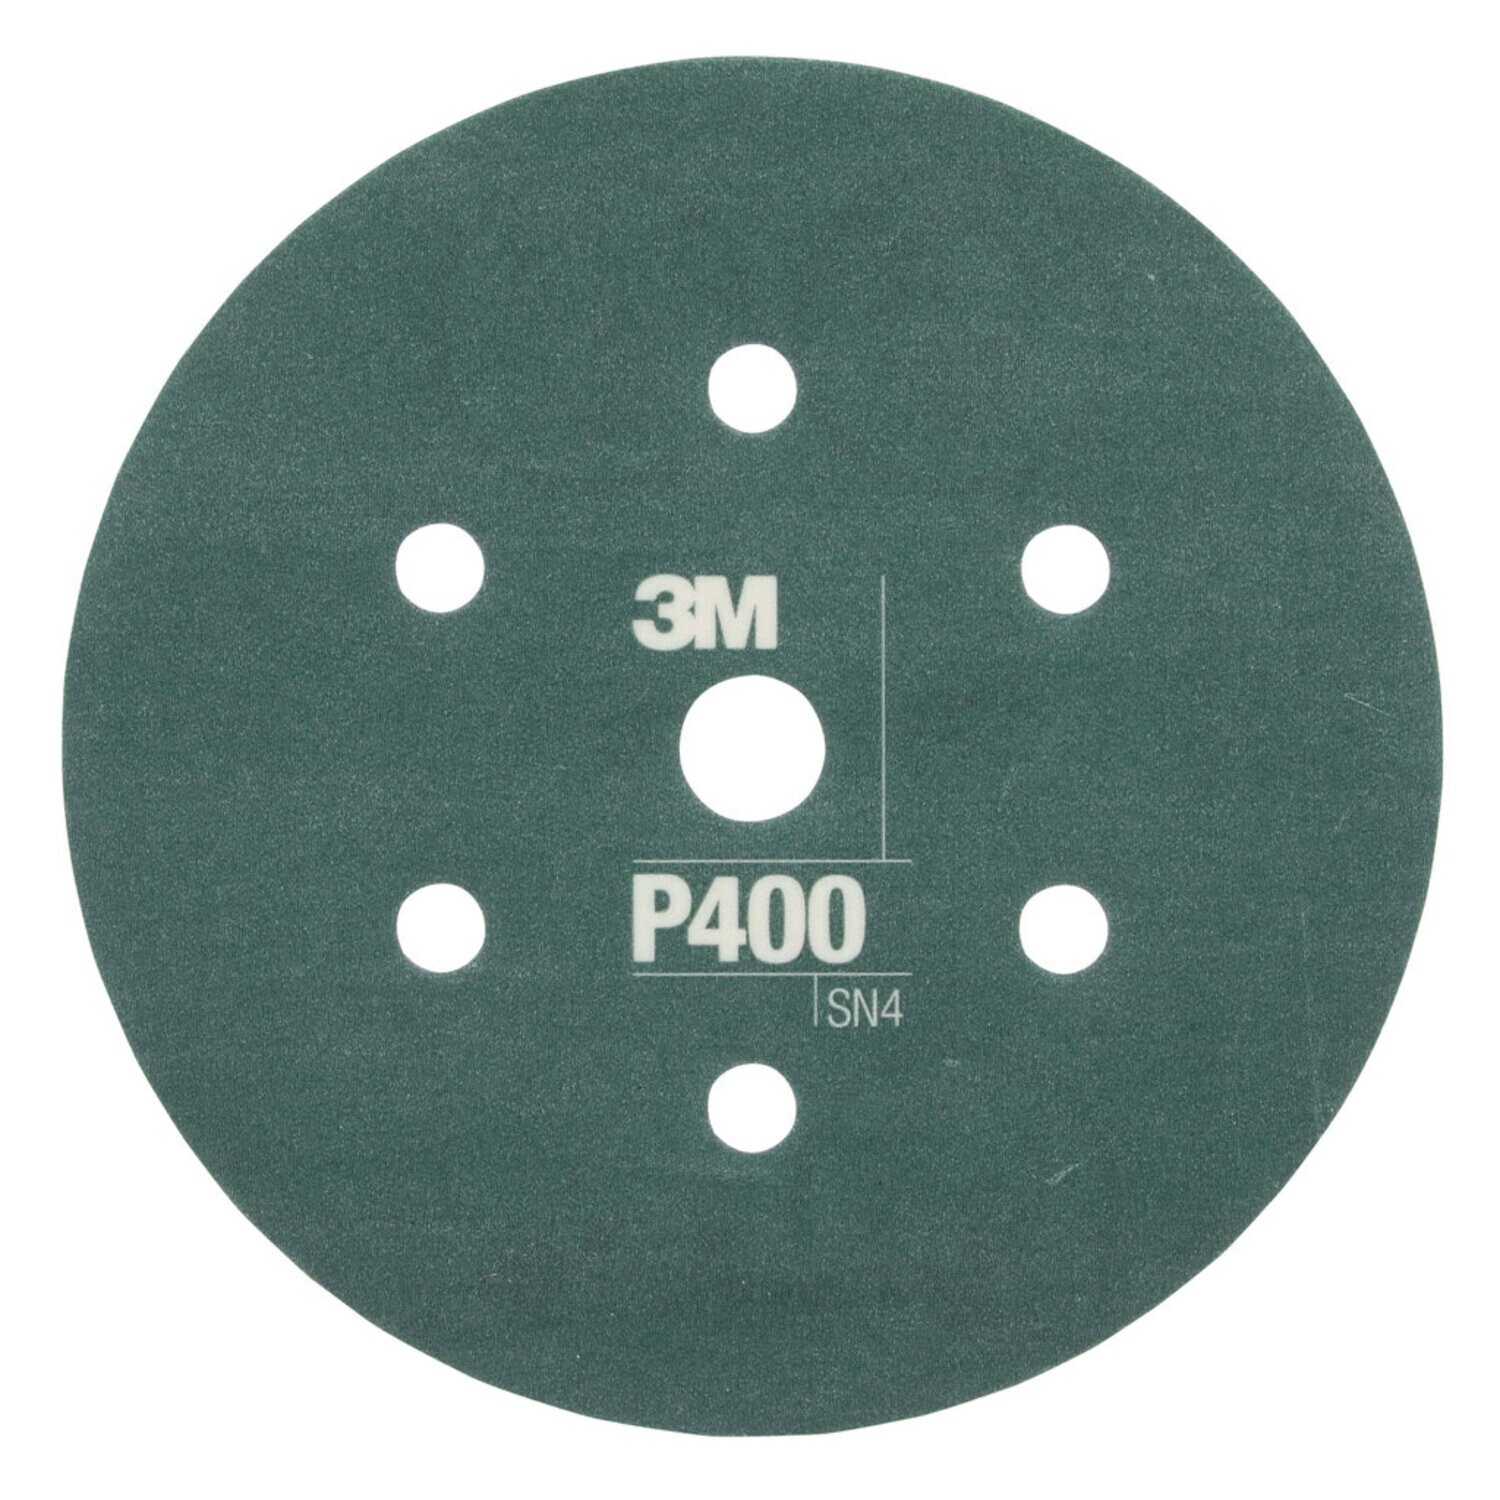 7000120193 - 3M Hookit Flexible Abrasive Disc 270J, 34403, 6 in, Dust Free, P400,
25 disc per carton, 5 cartons per case